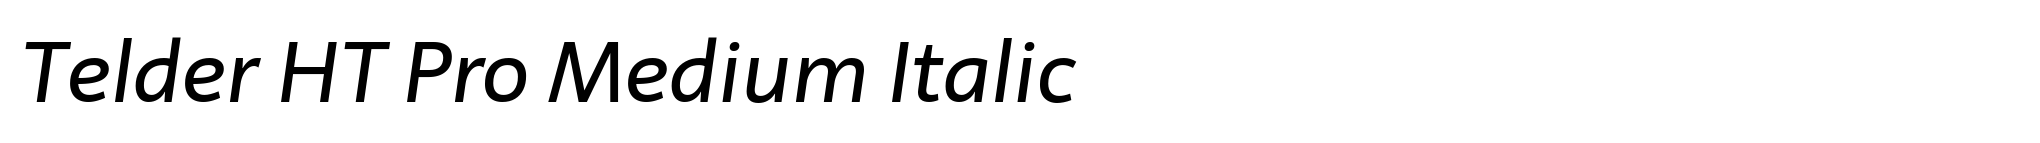 Telder HT Pro Medium Italic image